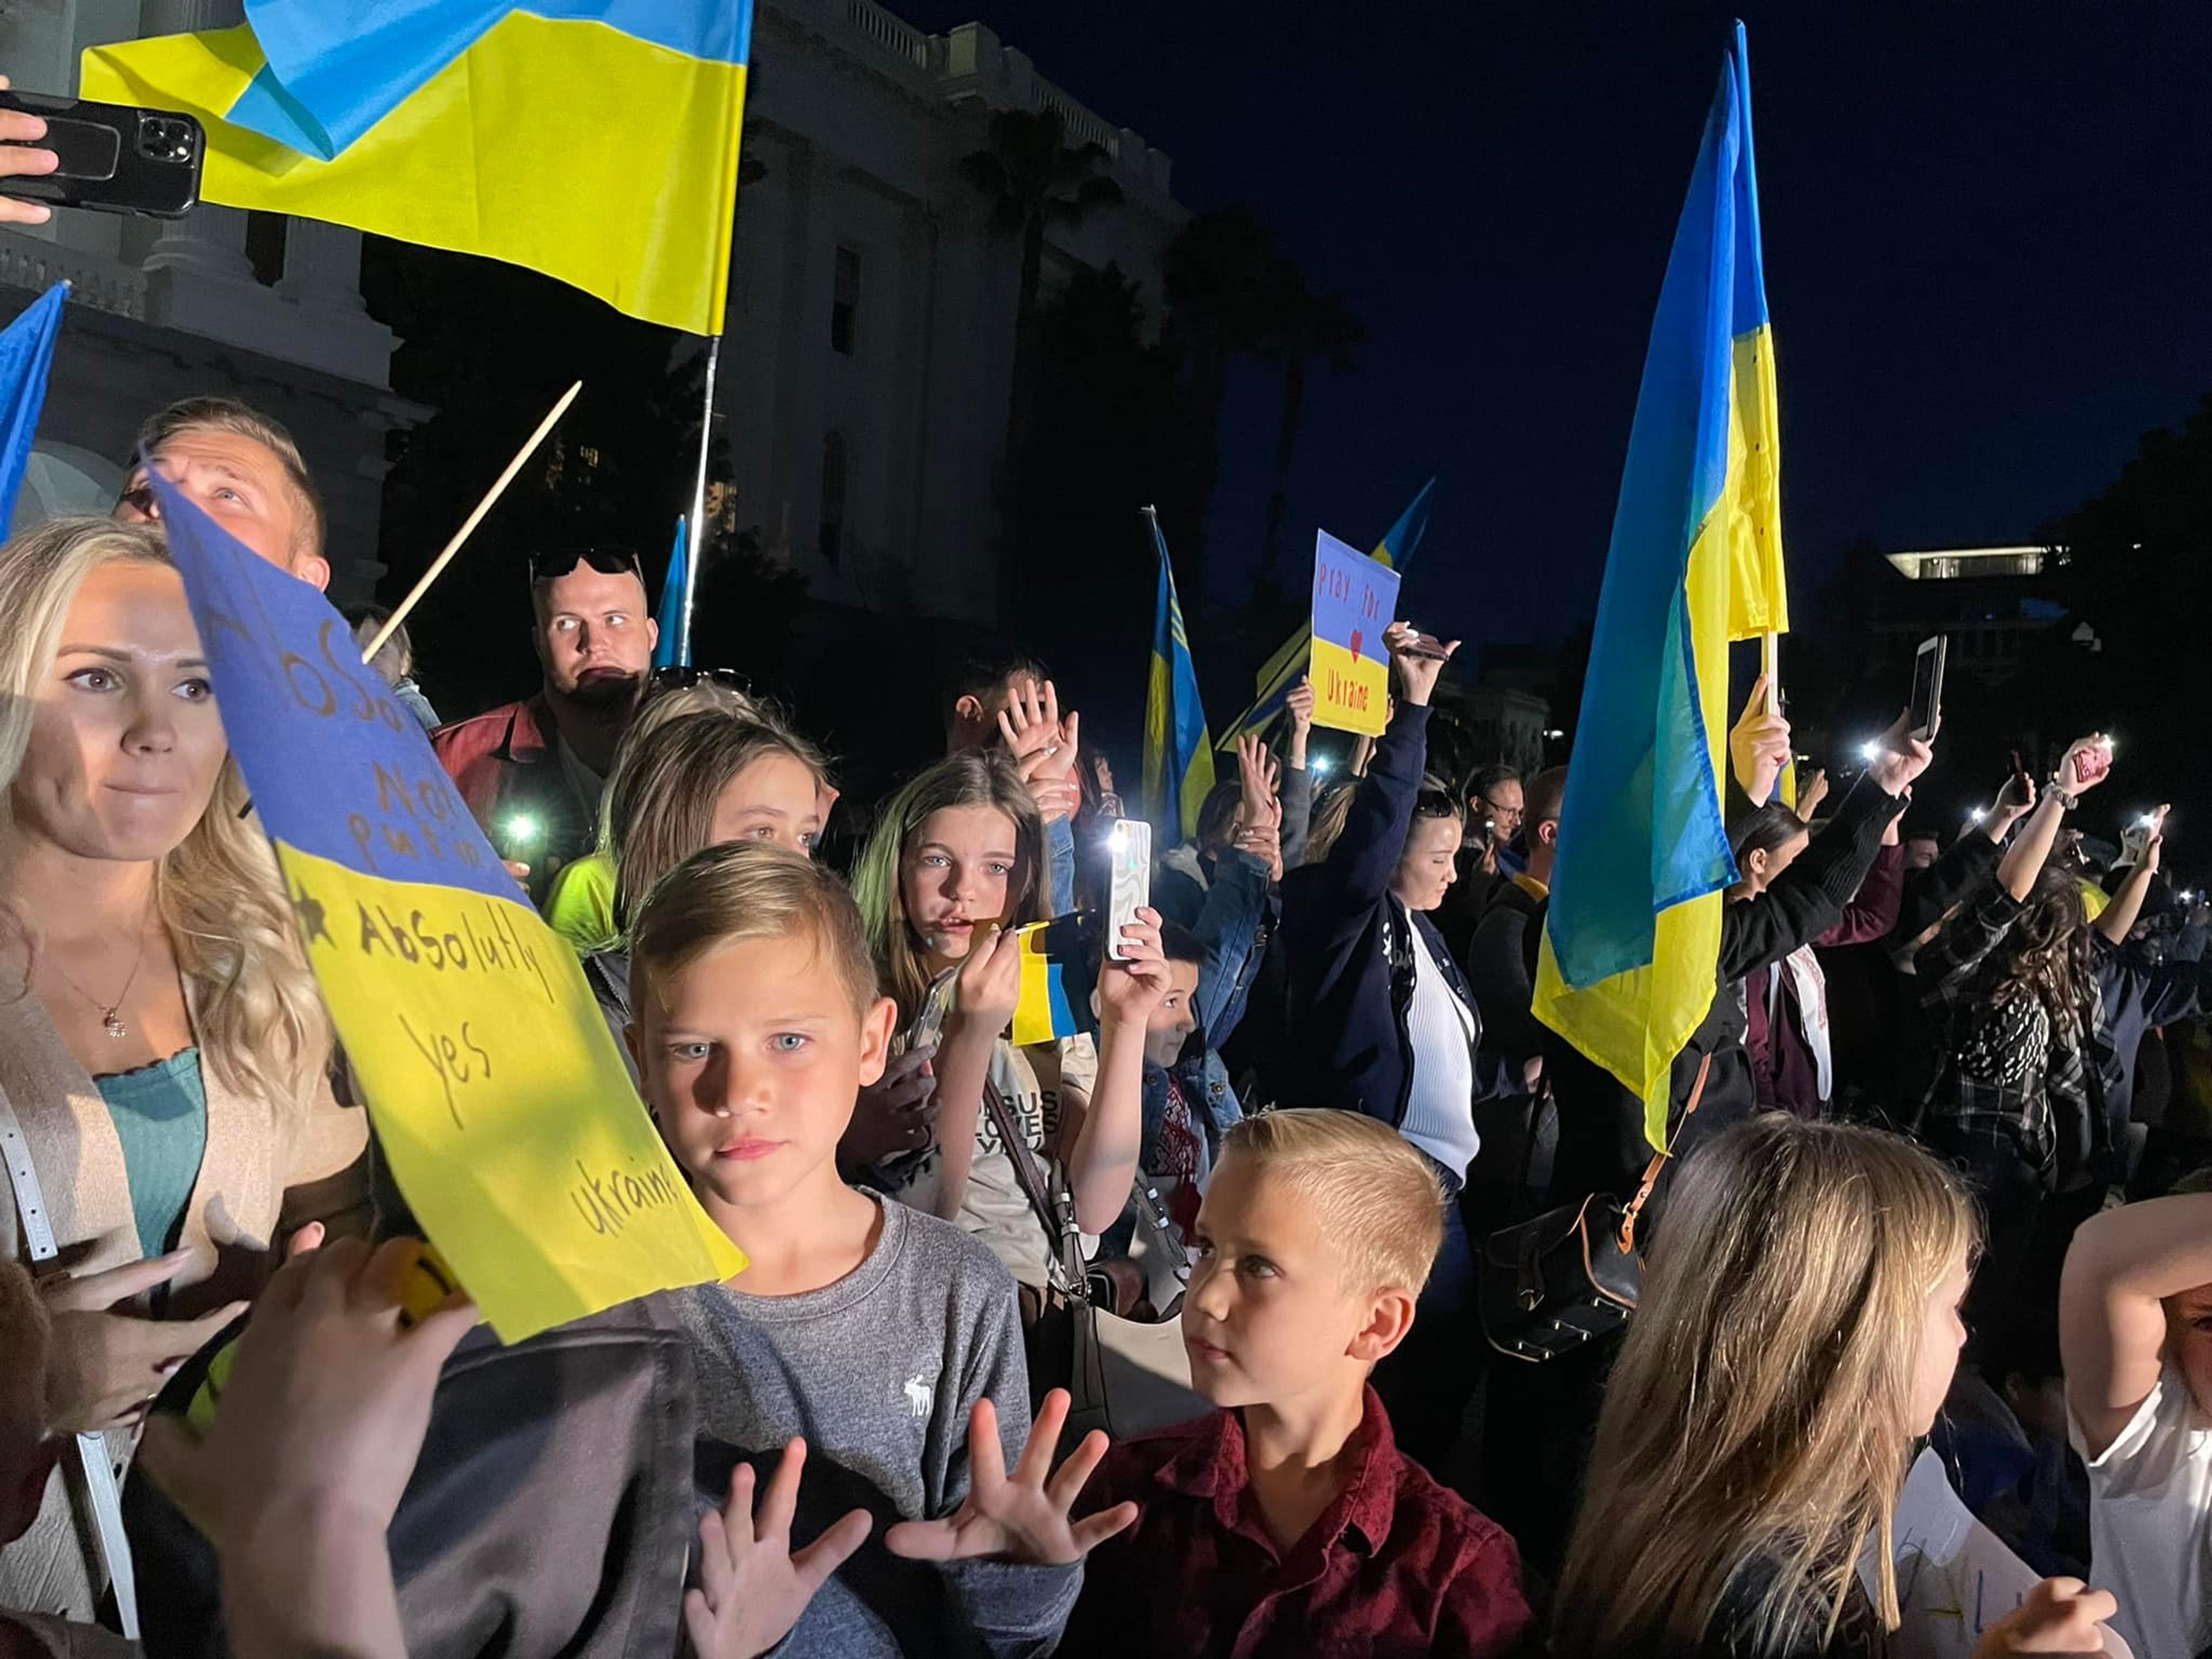 Stop the War demonstration in response to Putin’s invasion to Ukraine